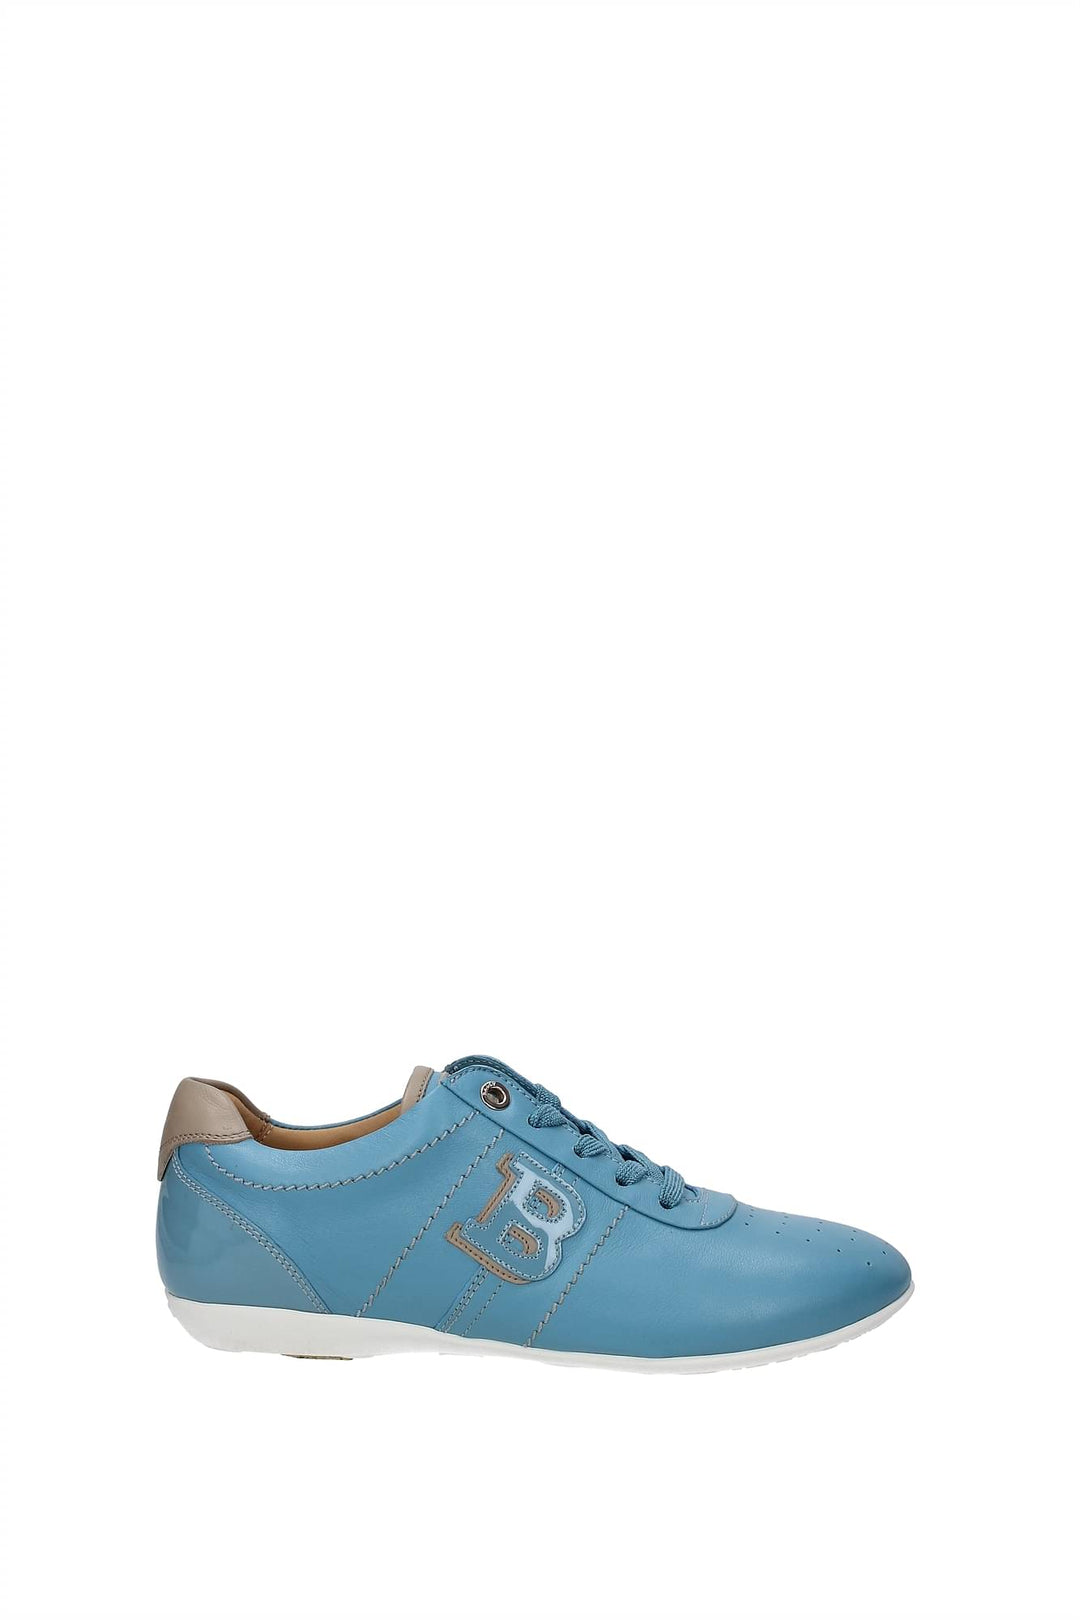 Sneakers Pelle Blu - Bally - Donna